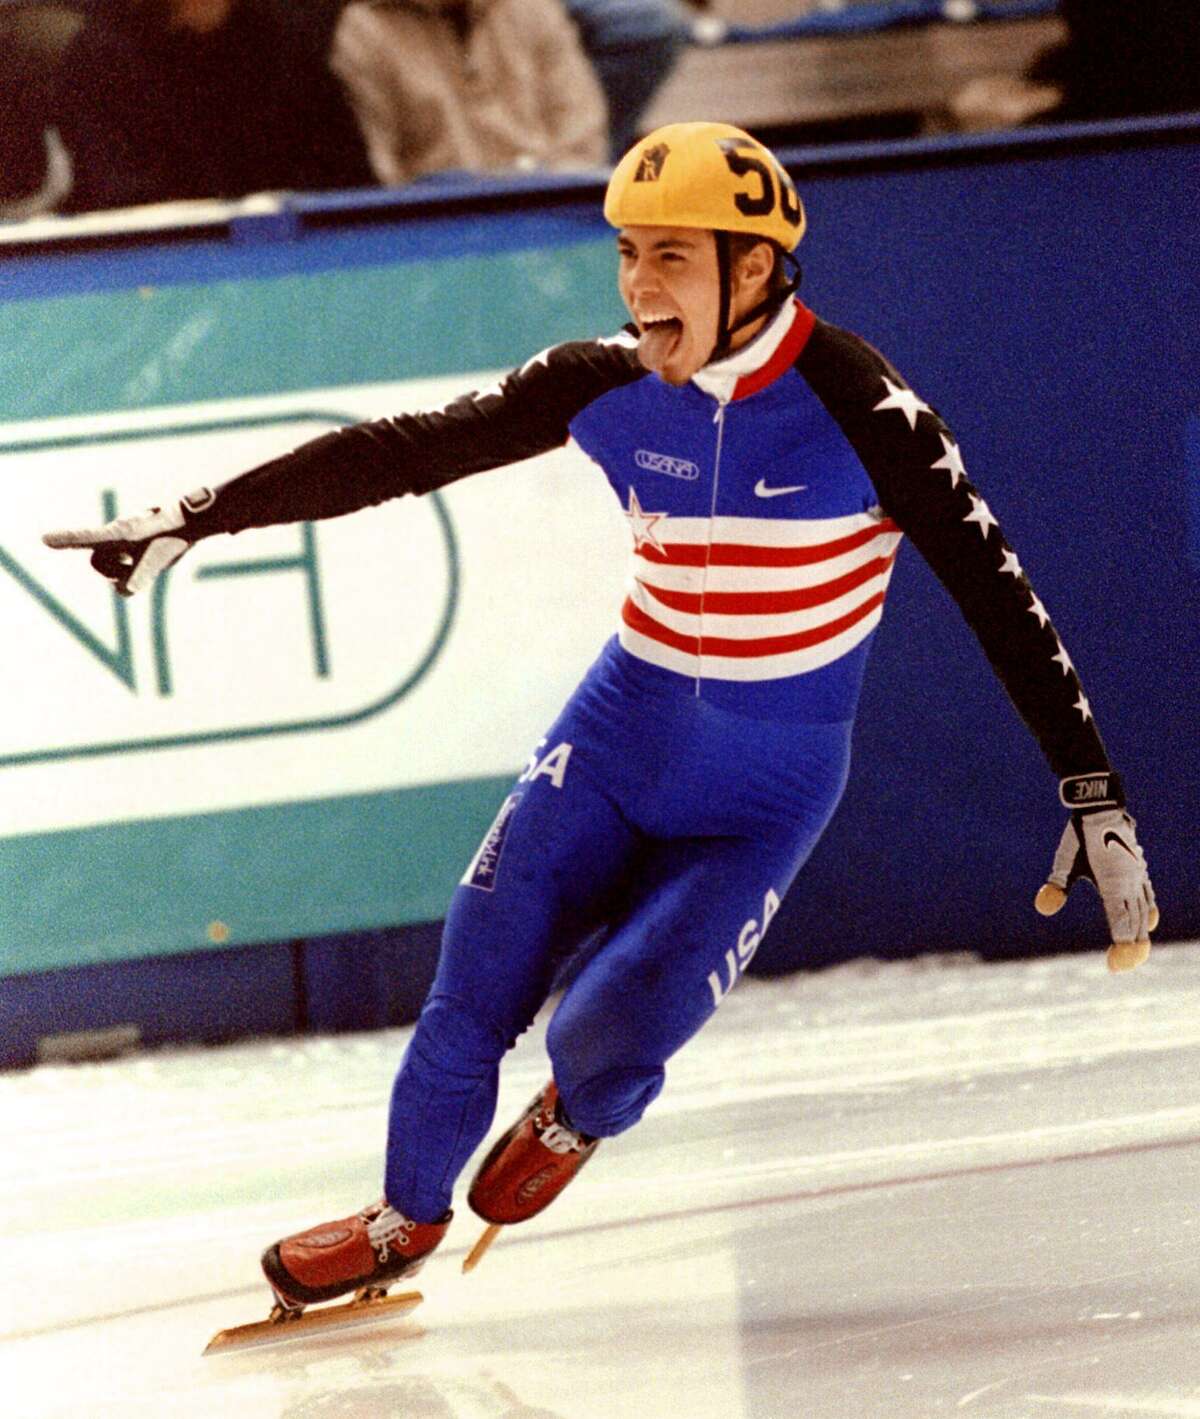 Apolo Anton Ohno of the US celebrates winning the men's 500-meter World Cup short track speedskating event Oct. 21, 2000 in Calgary, Alberta.